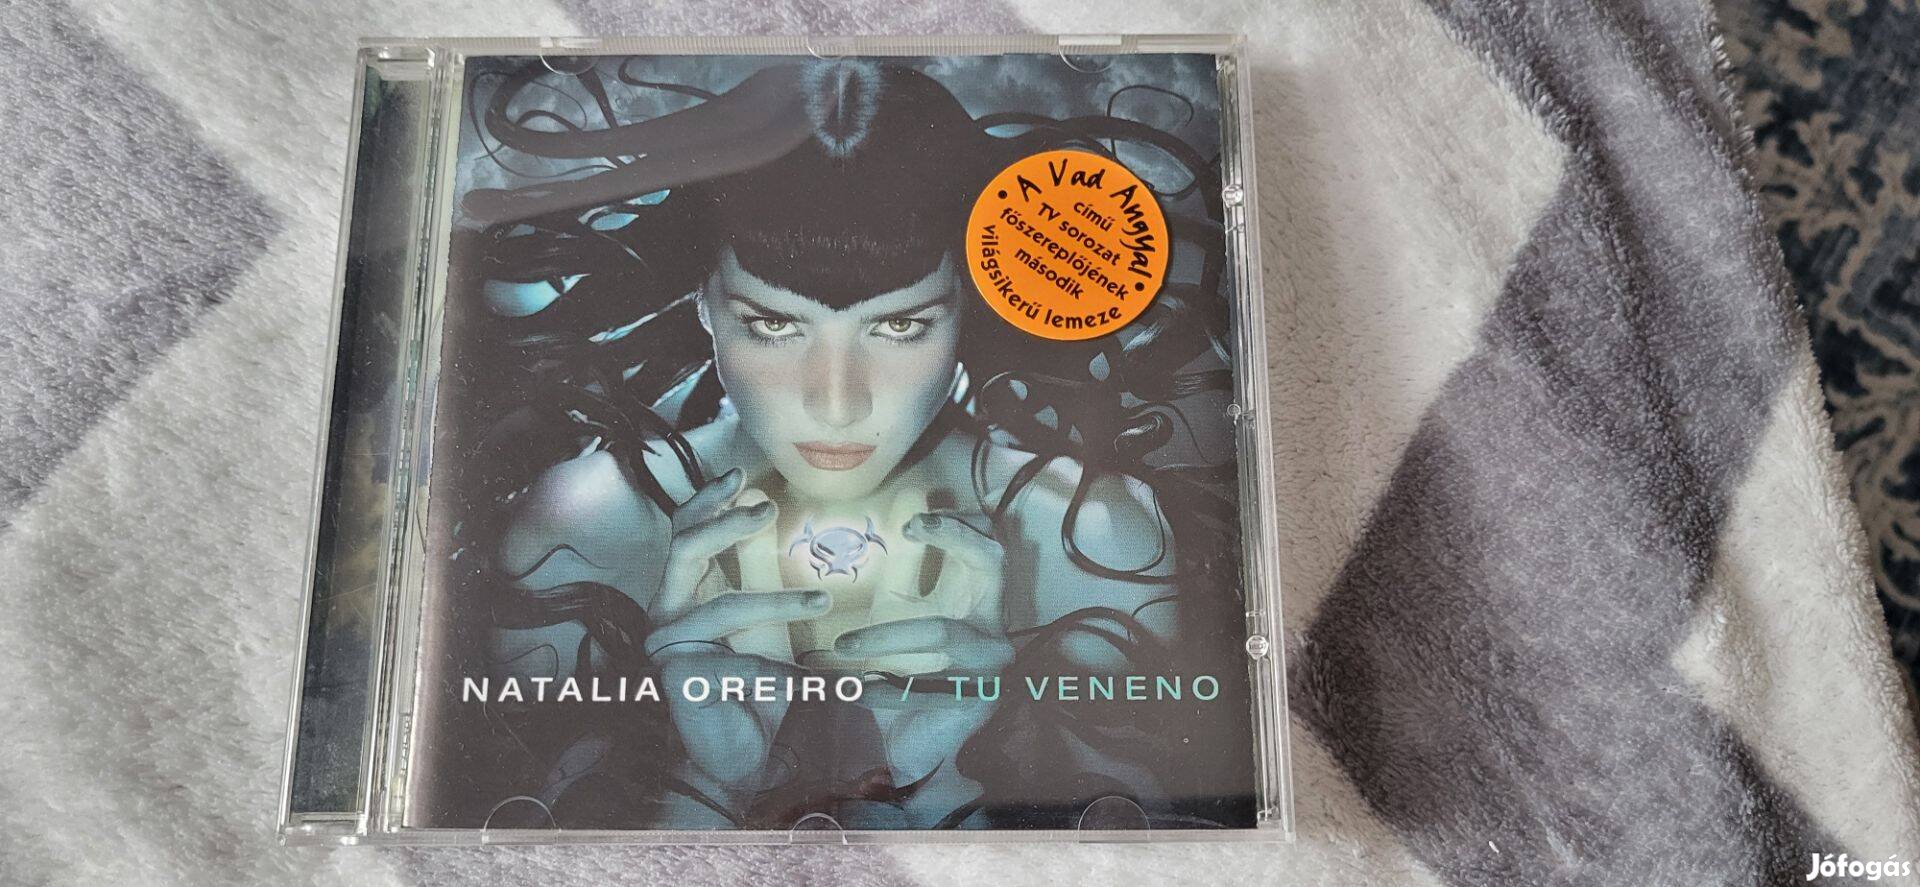 Natalia Oreiro Tu veneno CD